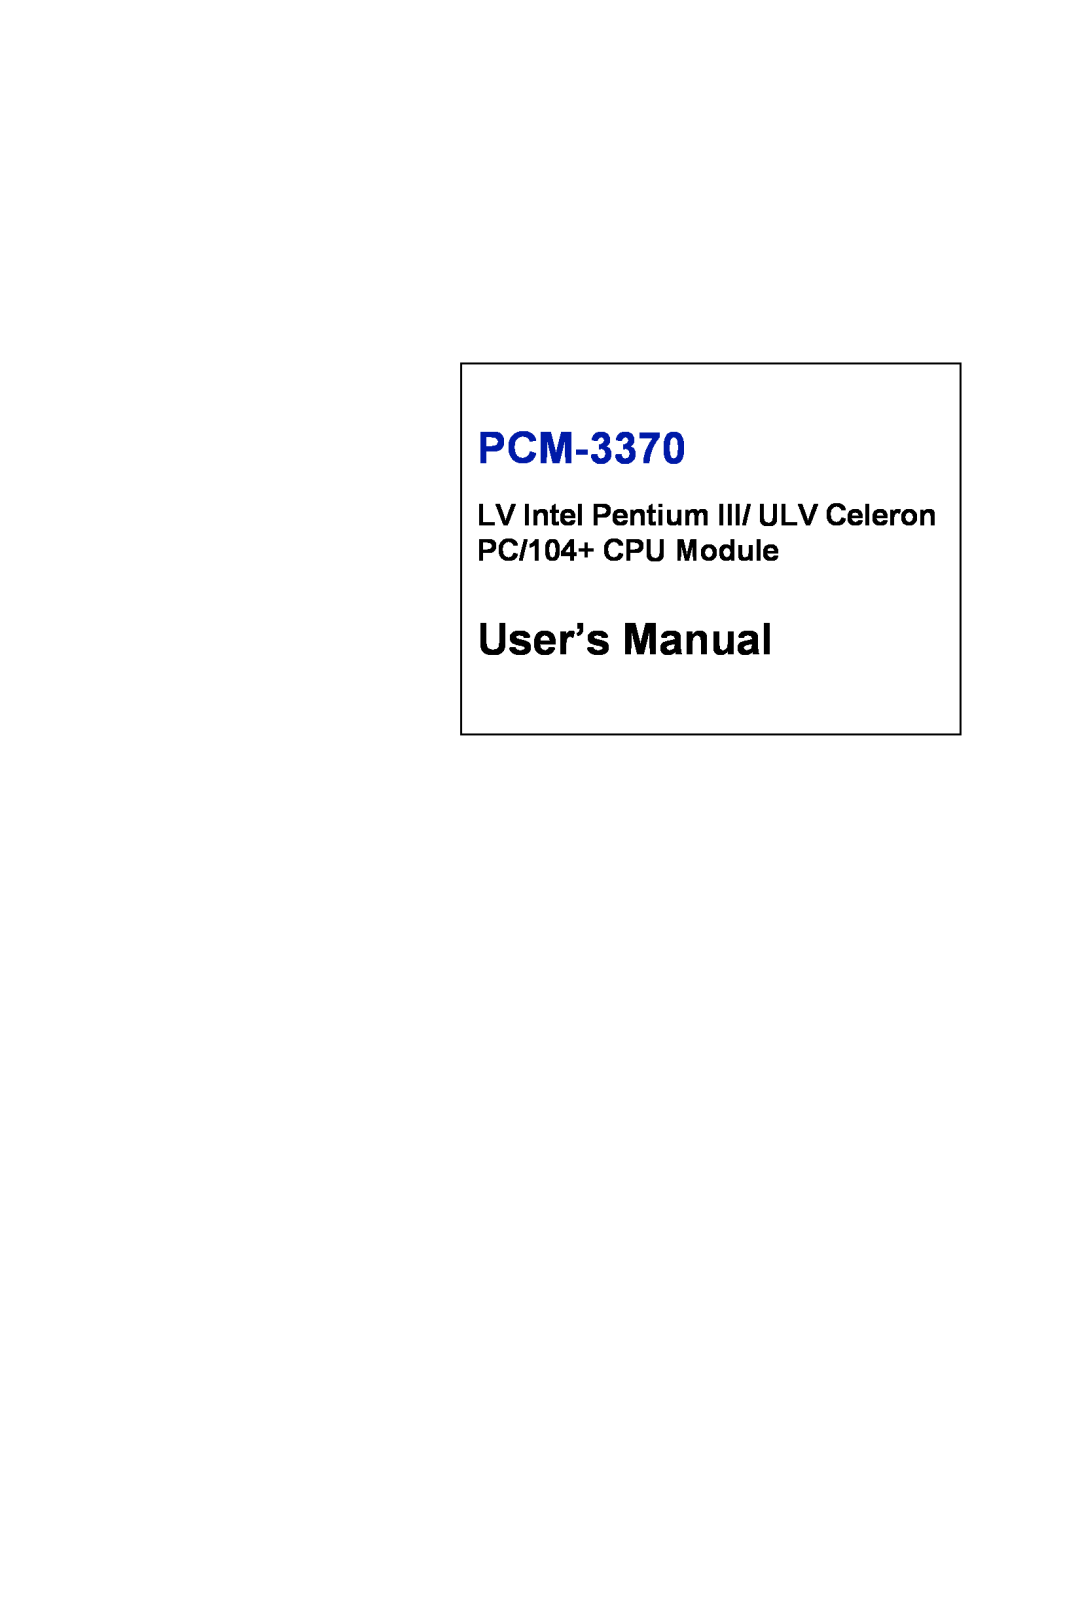 Intel PCM-3370 user manual User’s Manual, LV Intel Pentium III/ ULV Celeron PC/104+ CPU Module 